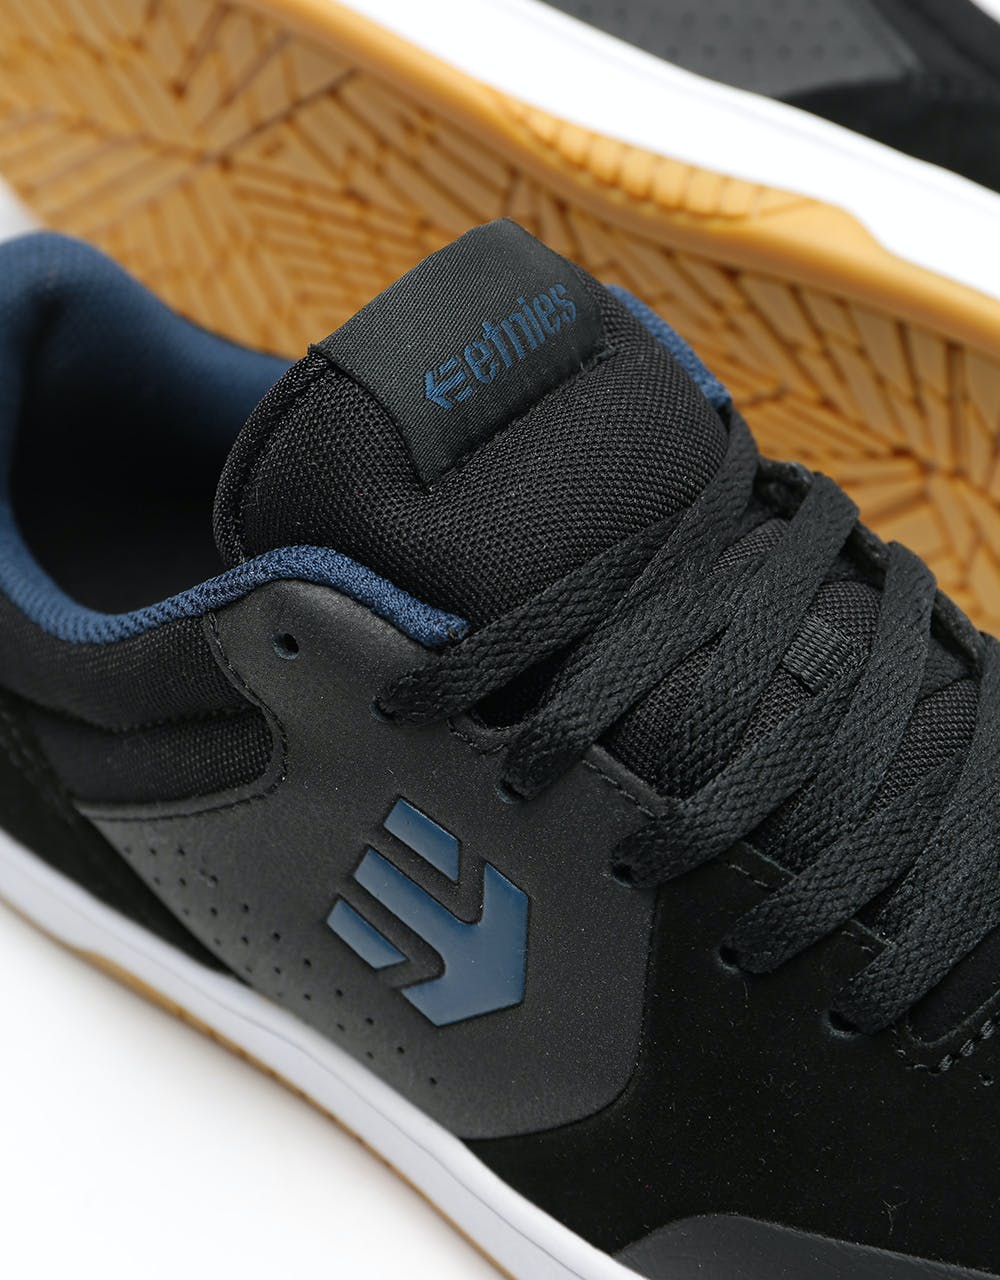 Etnies x Michelin Marana Skate Shoes - Black/Blue